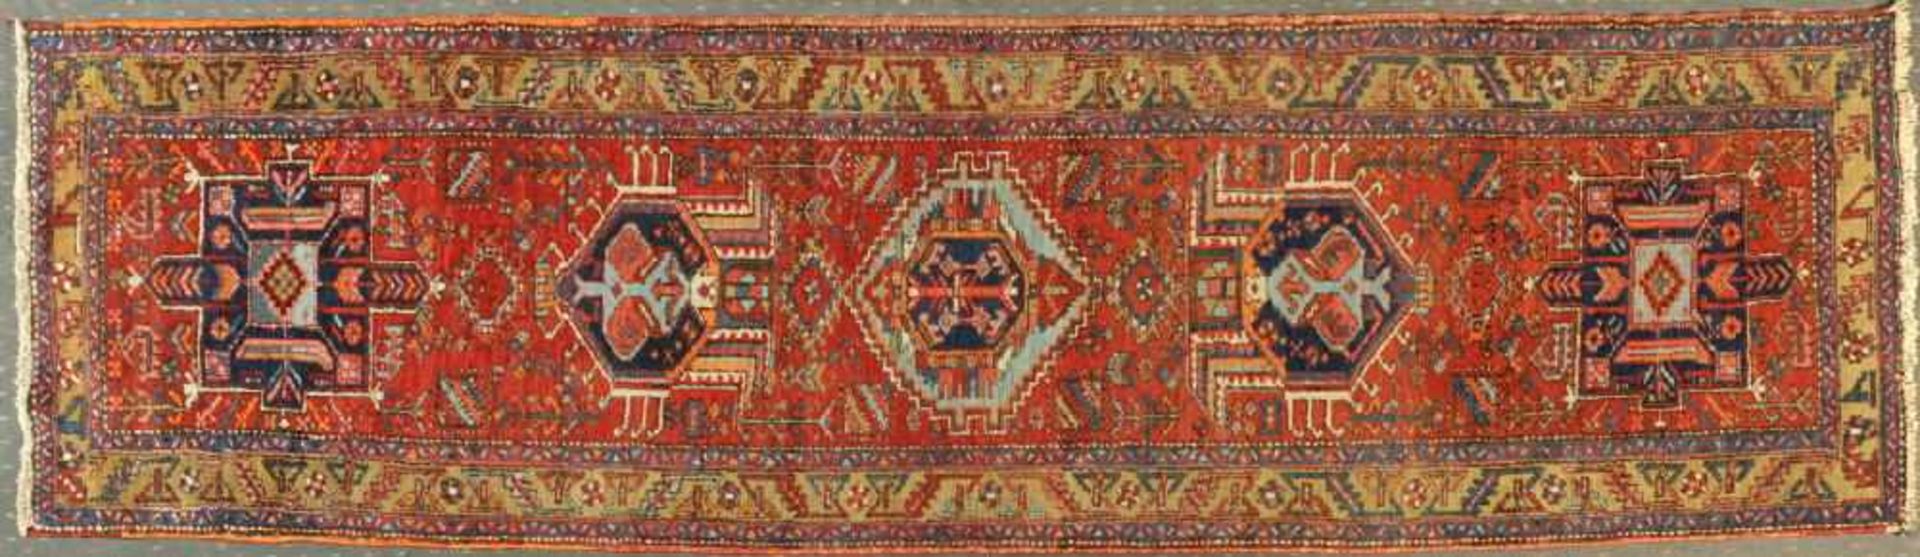 Heris-Galerie, Persien, 90 x 308 cmalt, Wolle, rotgrundig, 5 große, rustikale Motive in versch.